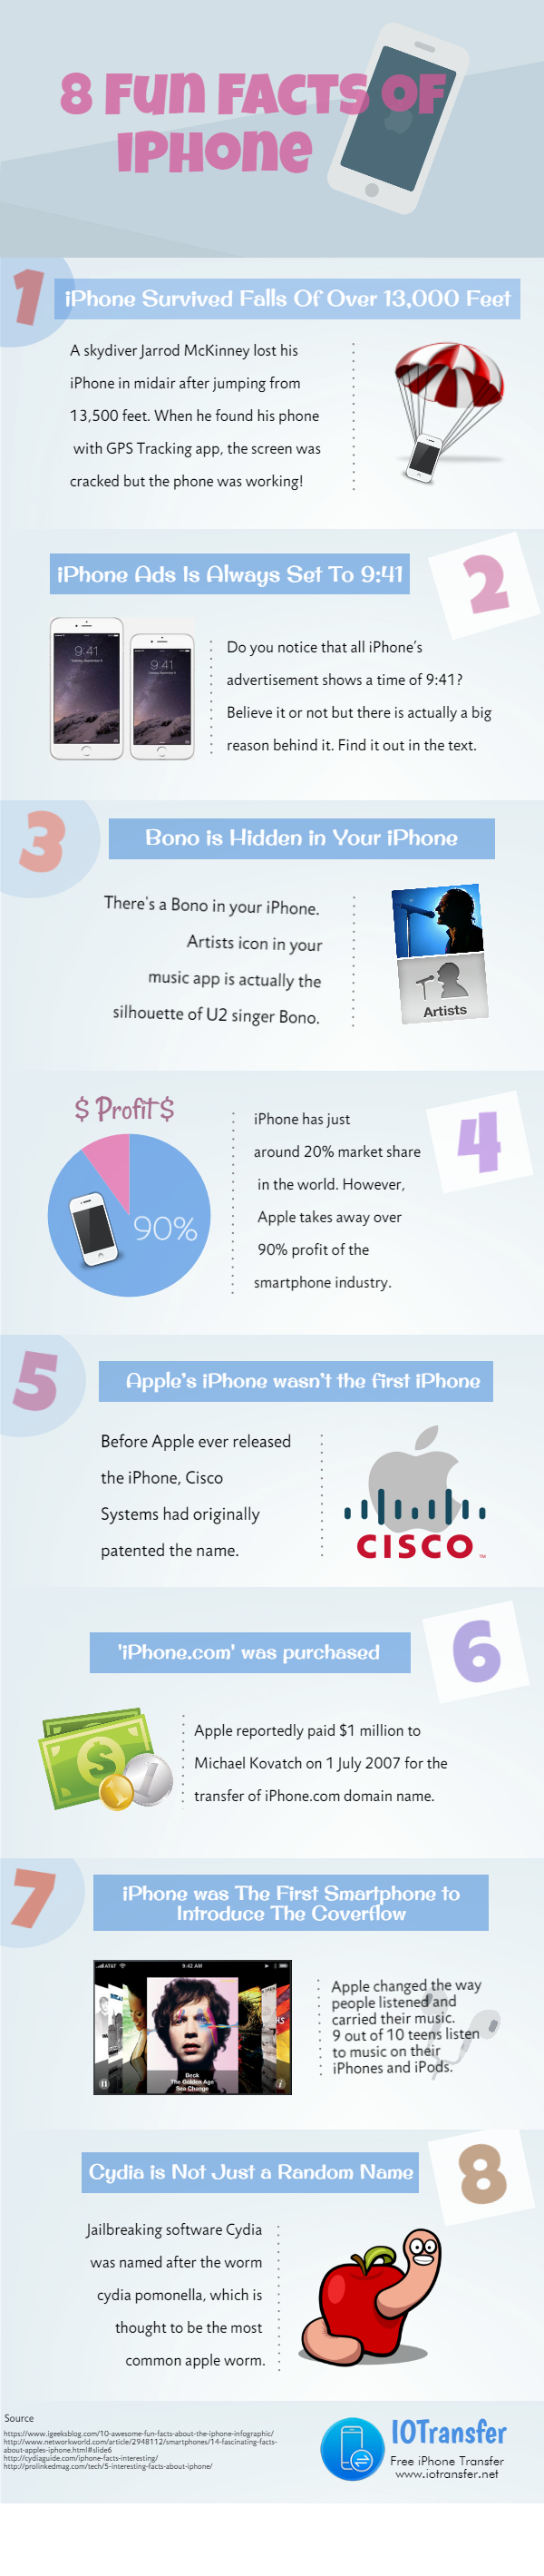 IOTransfer - 8 Fun Facts of iPhone